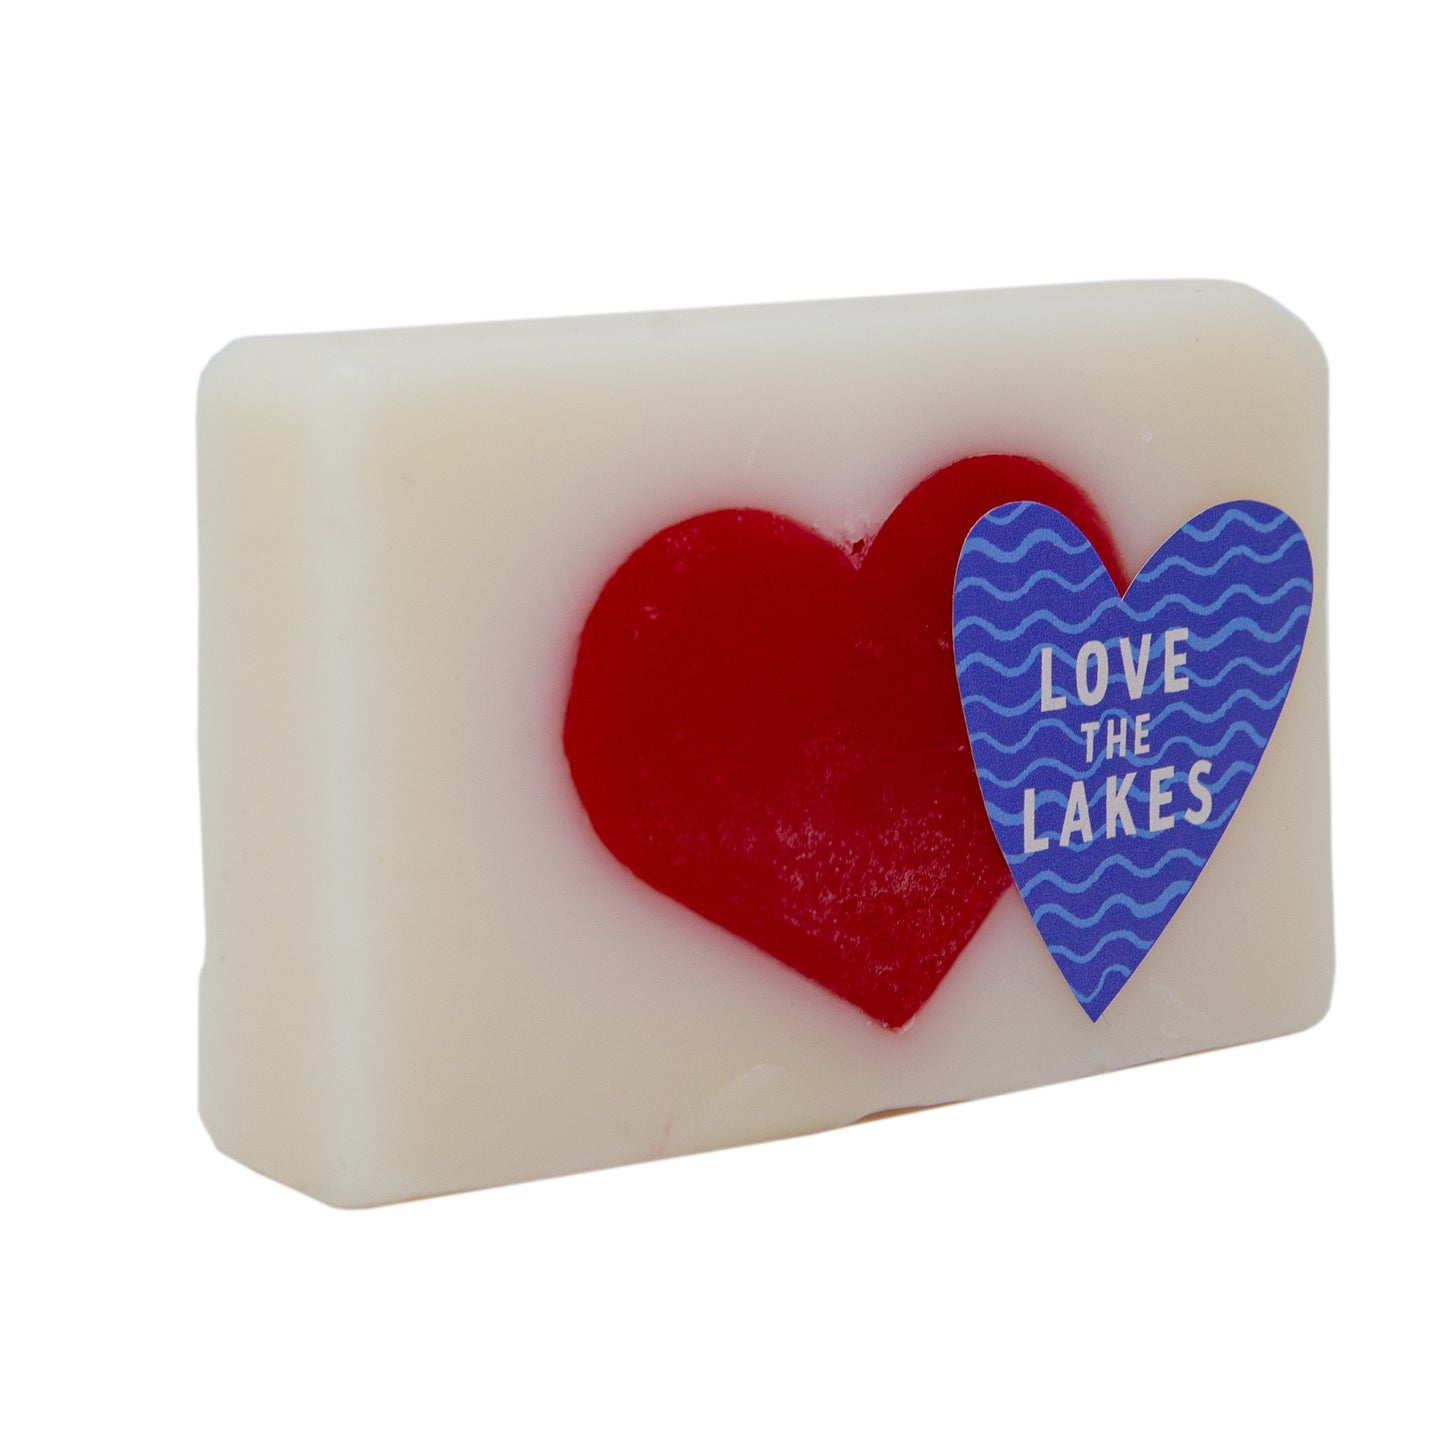 Love the Lakes Rose Heart Soap Slice